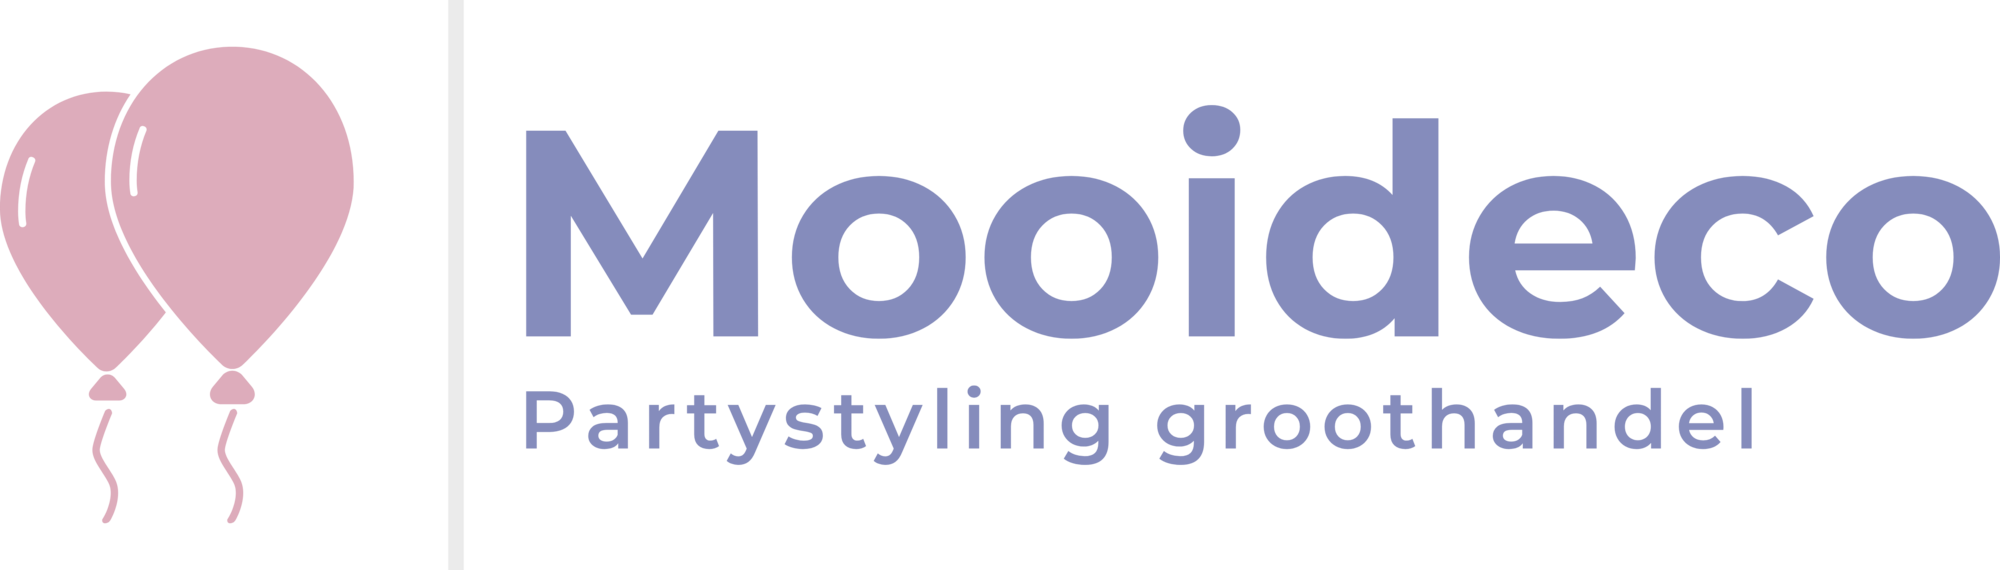 logo Mooideco Partystyling Groothandel